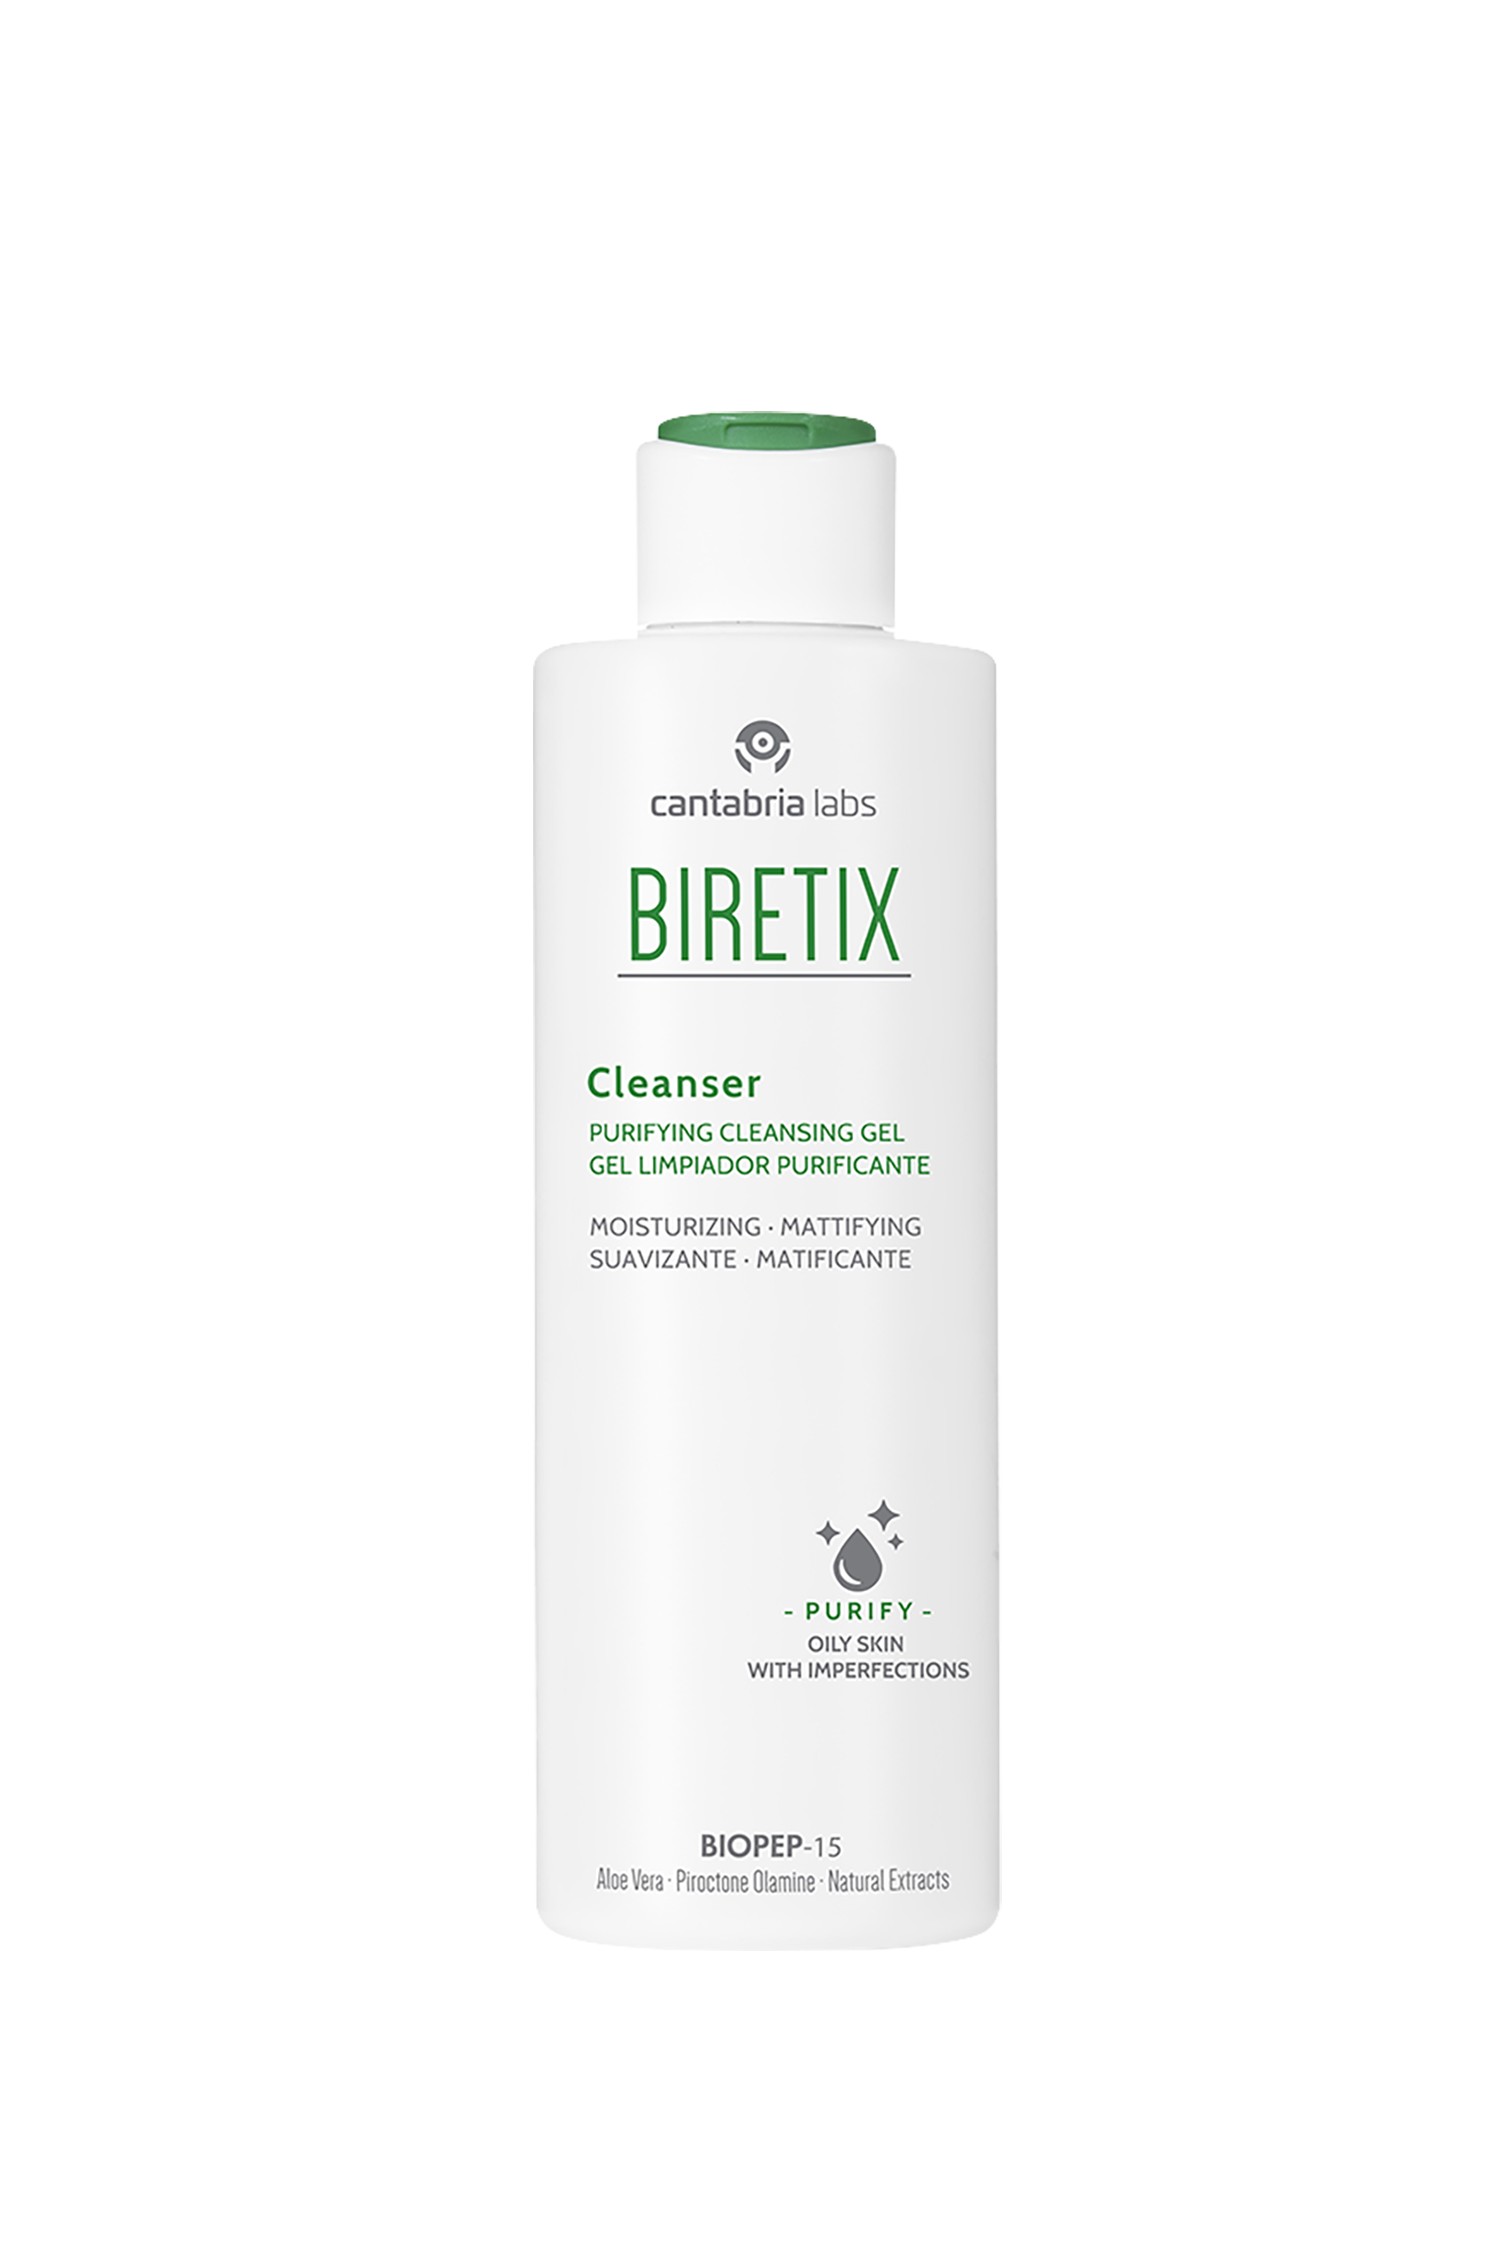 Biretix cleanser gel limpiador purificante, 200 ml | Farmacia Barata